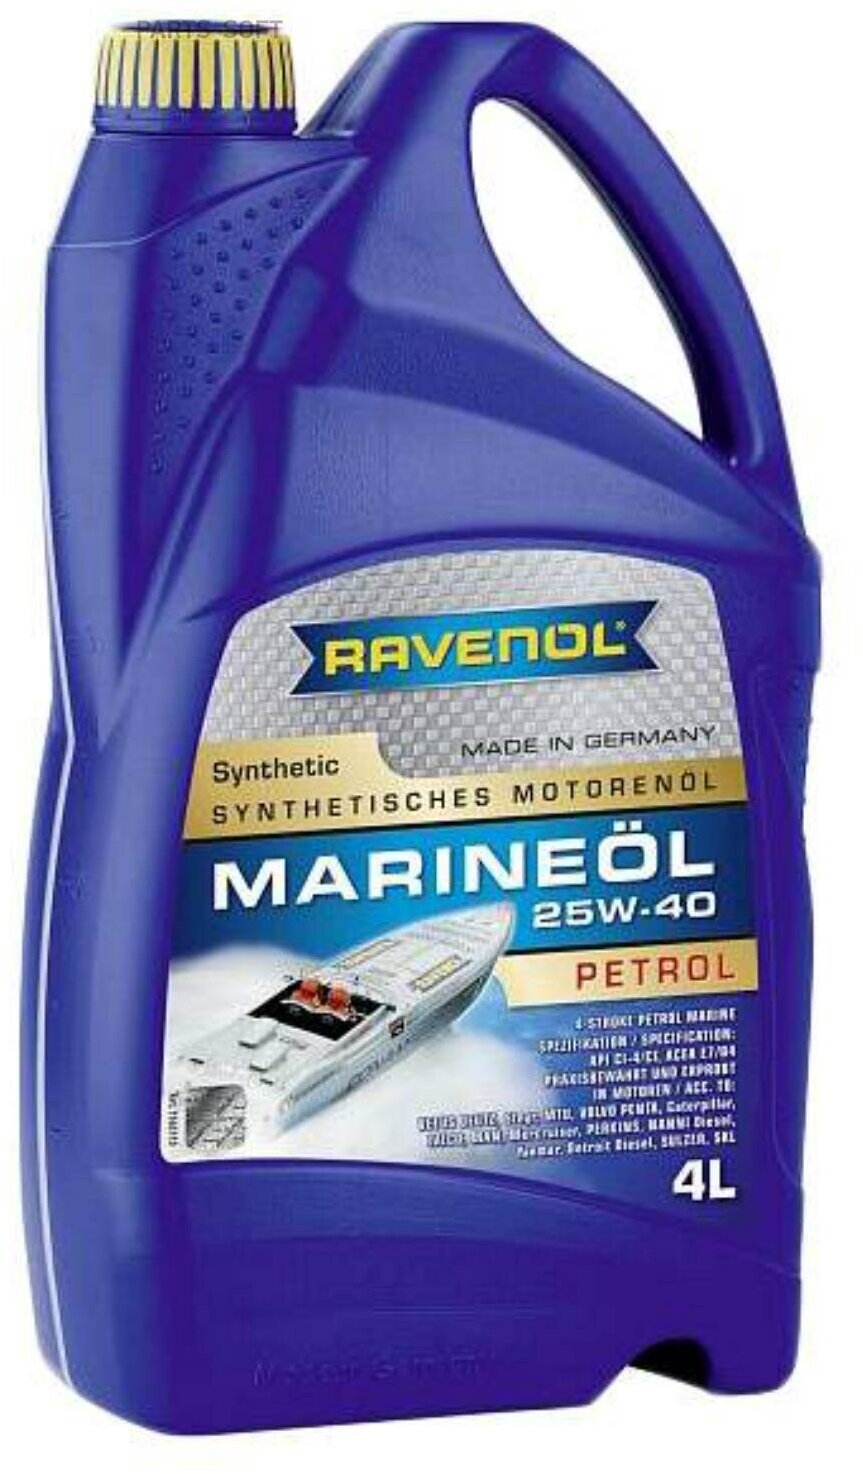 Моторное масло RAVENOL Marineoil PETROL SAE 25W-40 synthetic (4л) new